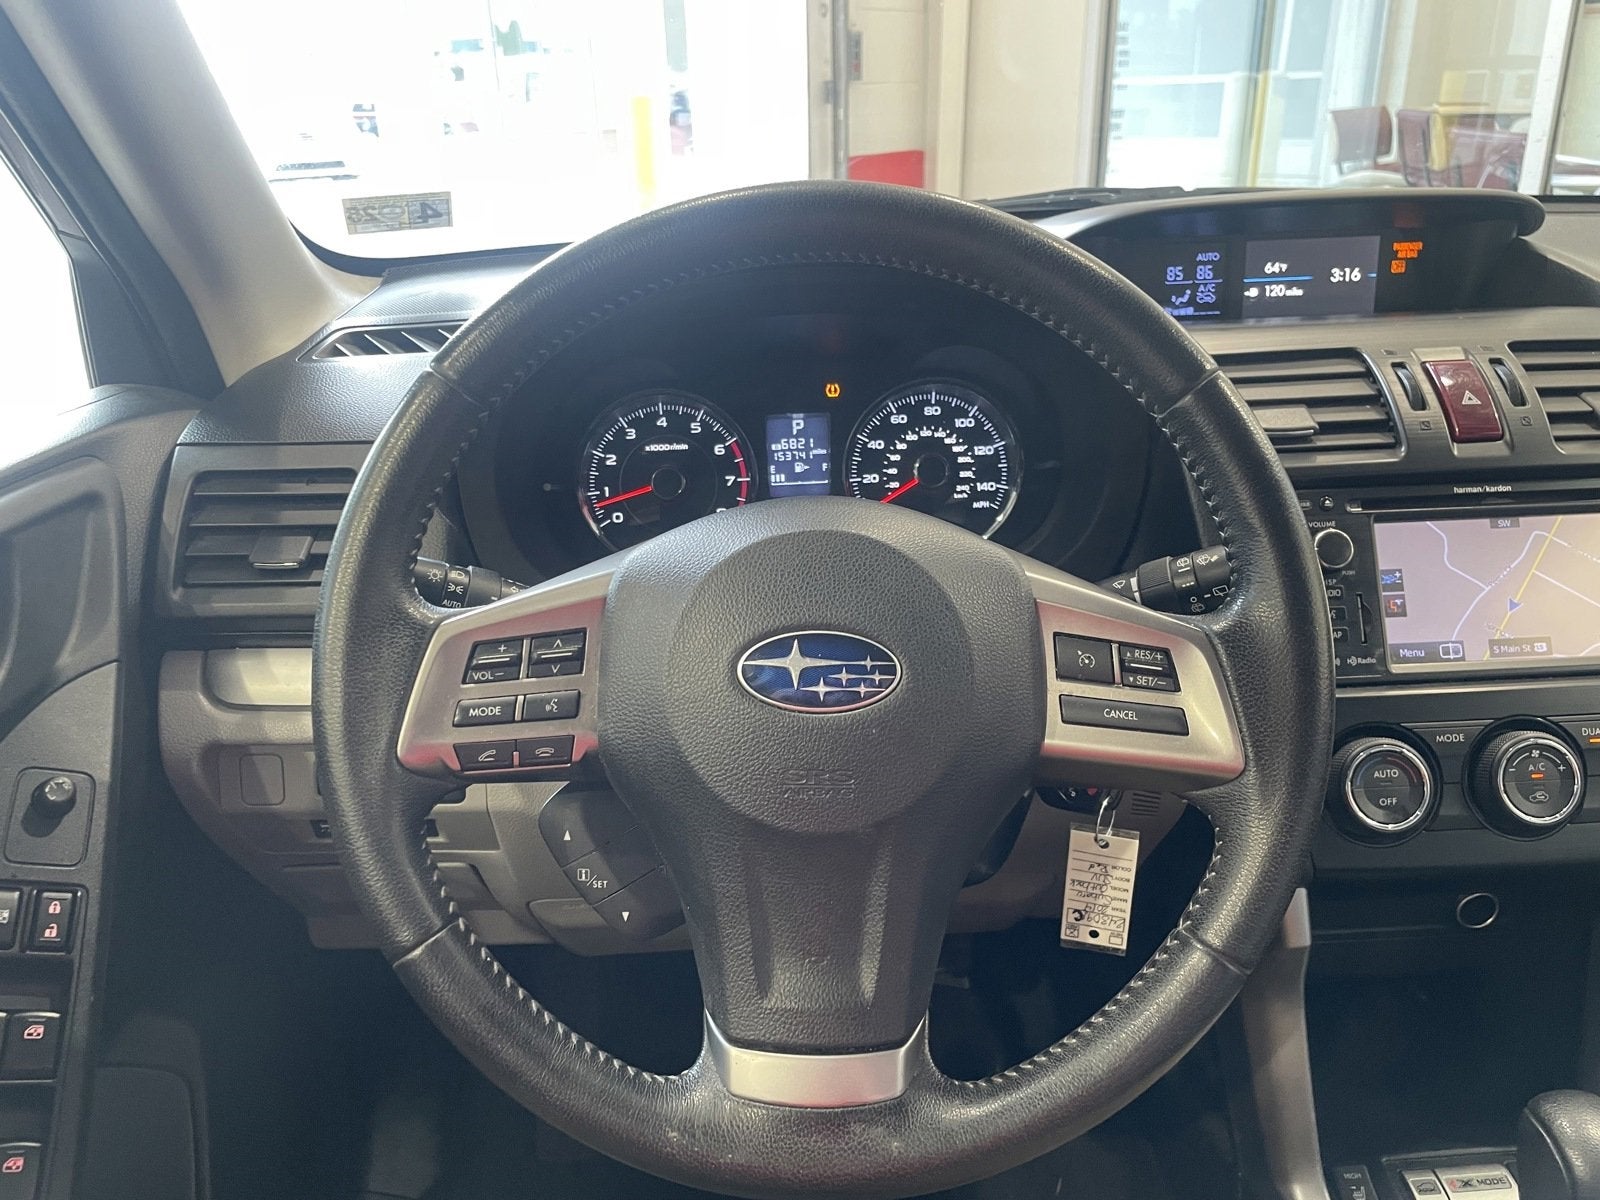 2014 Subaru Forester 2.5i Touring